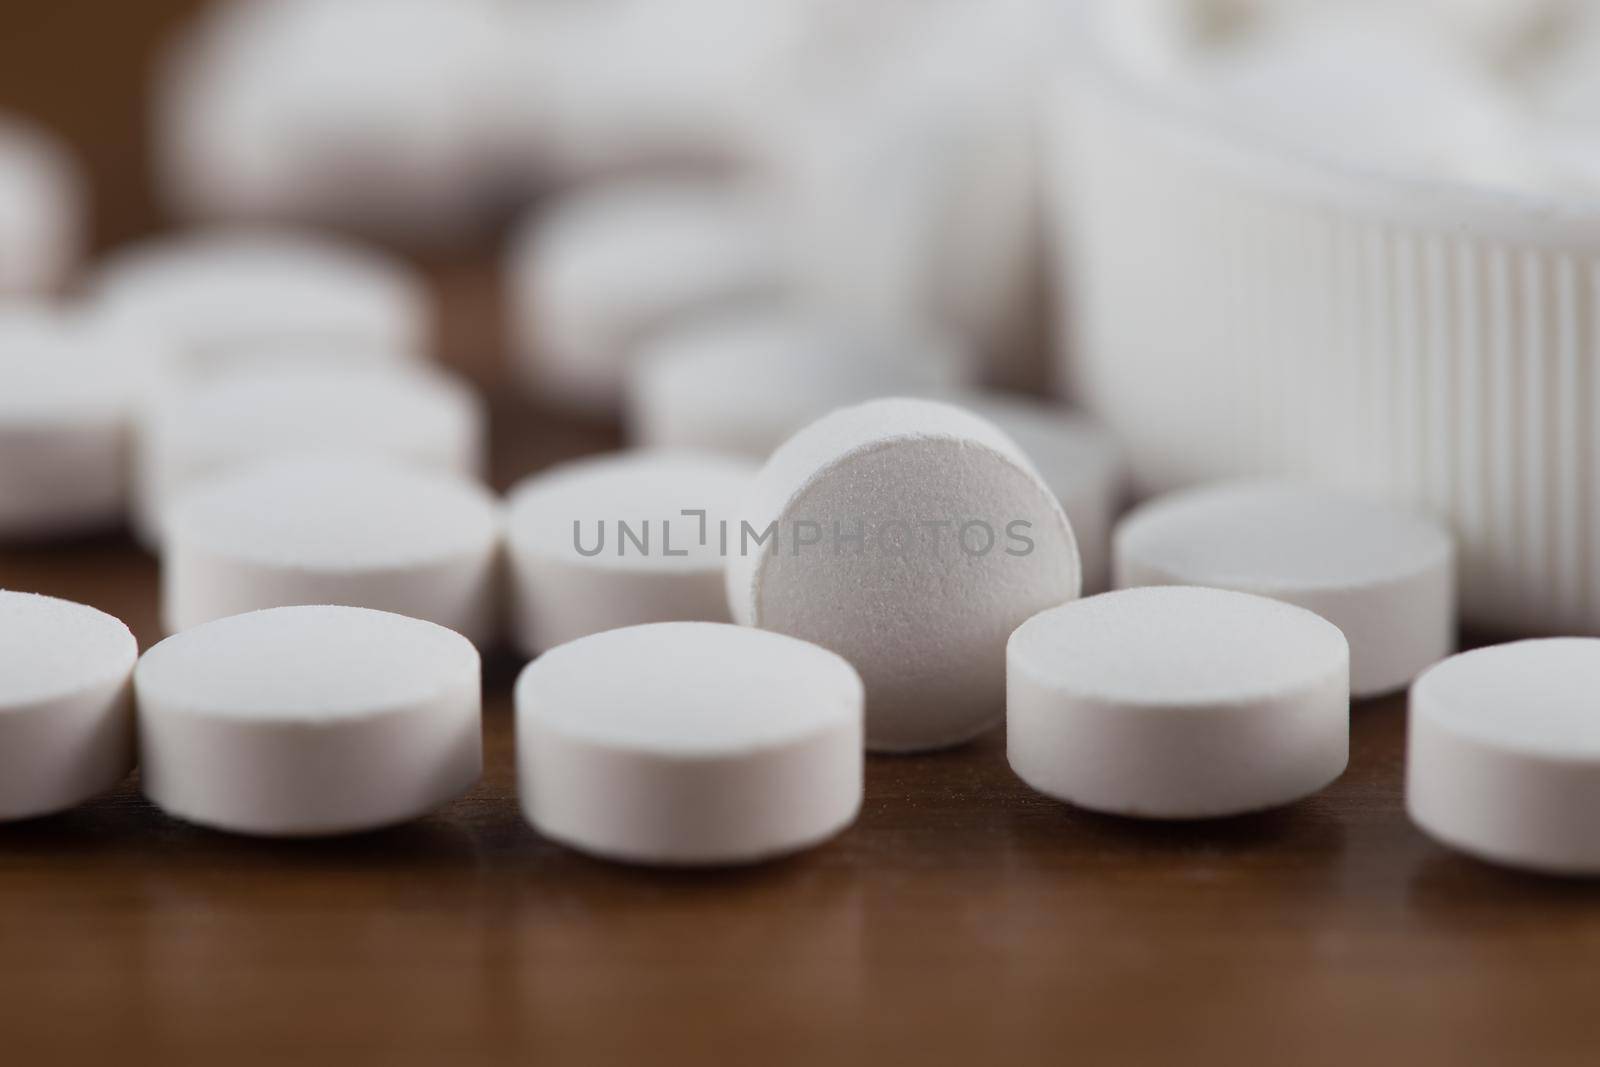 Close up of white pills.